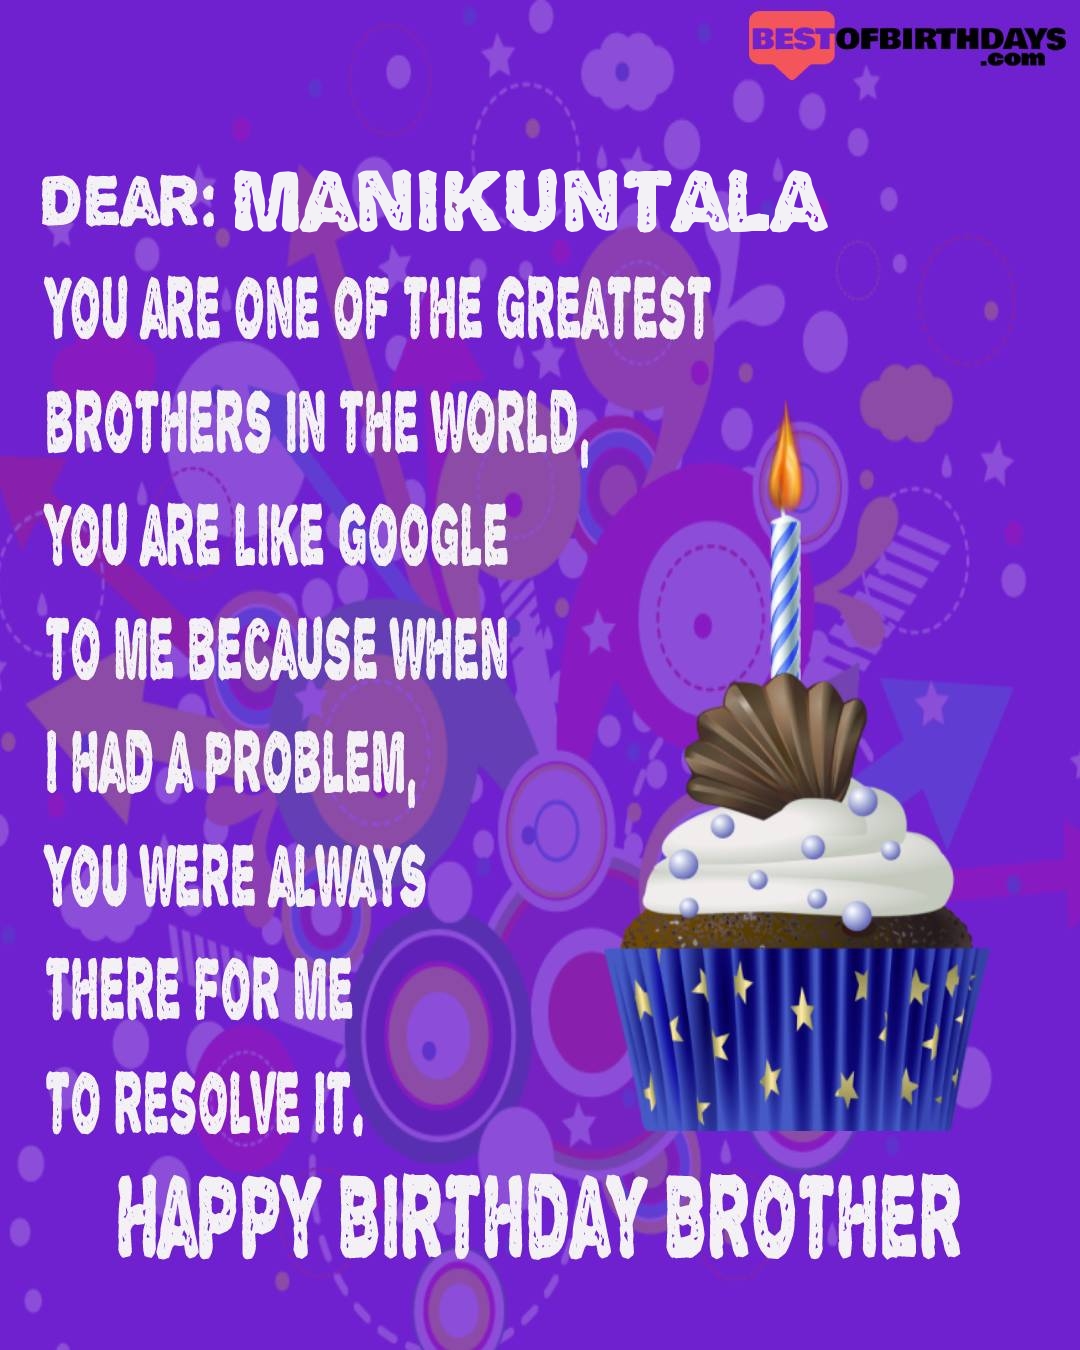 Happy birthday manikuntala bhai brother bro